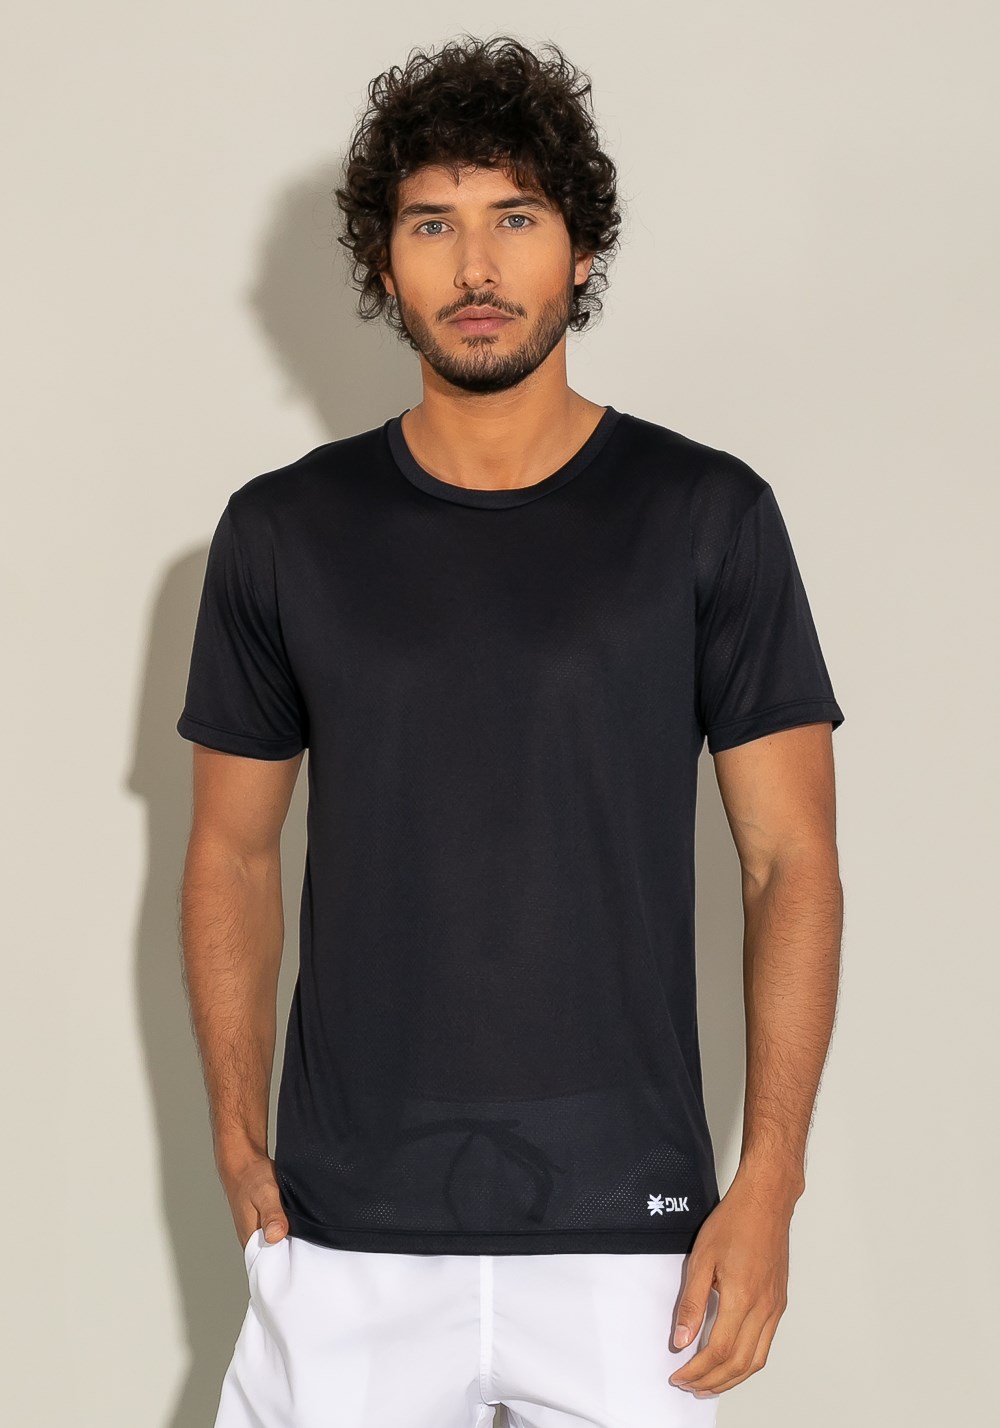 Camiseta poliamida manga curta dry fit for men preto